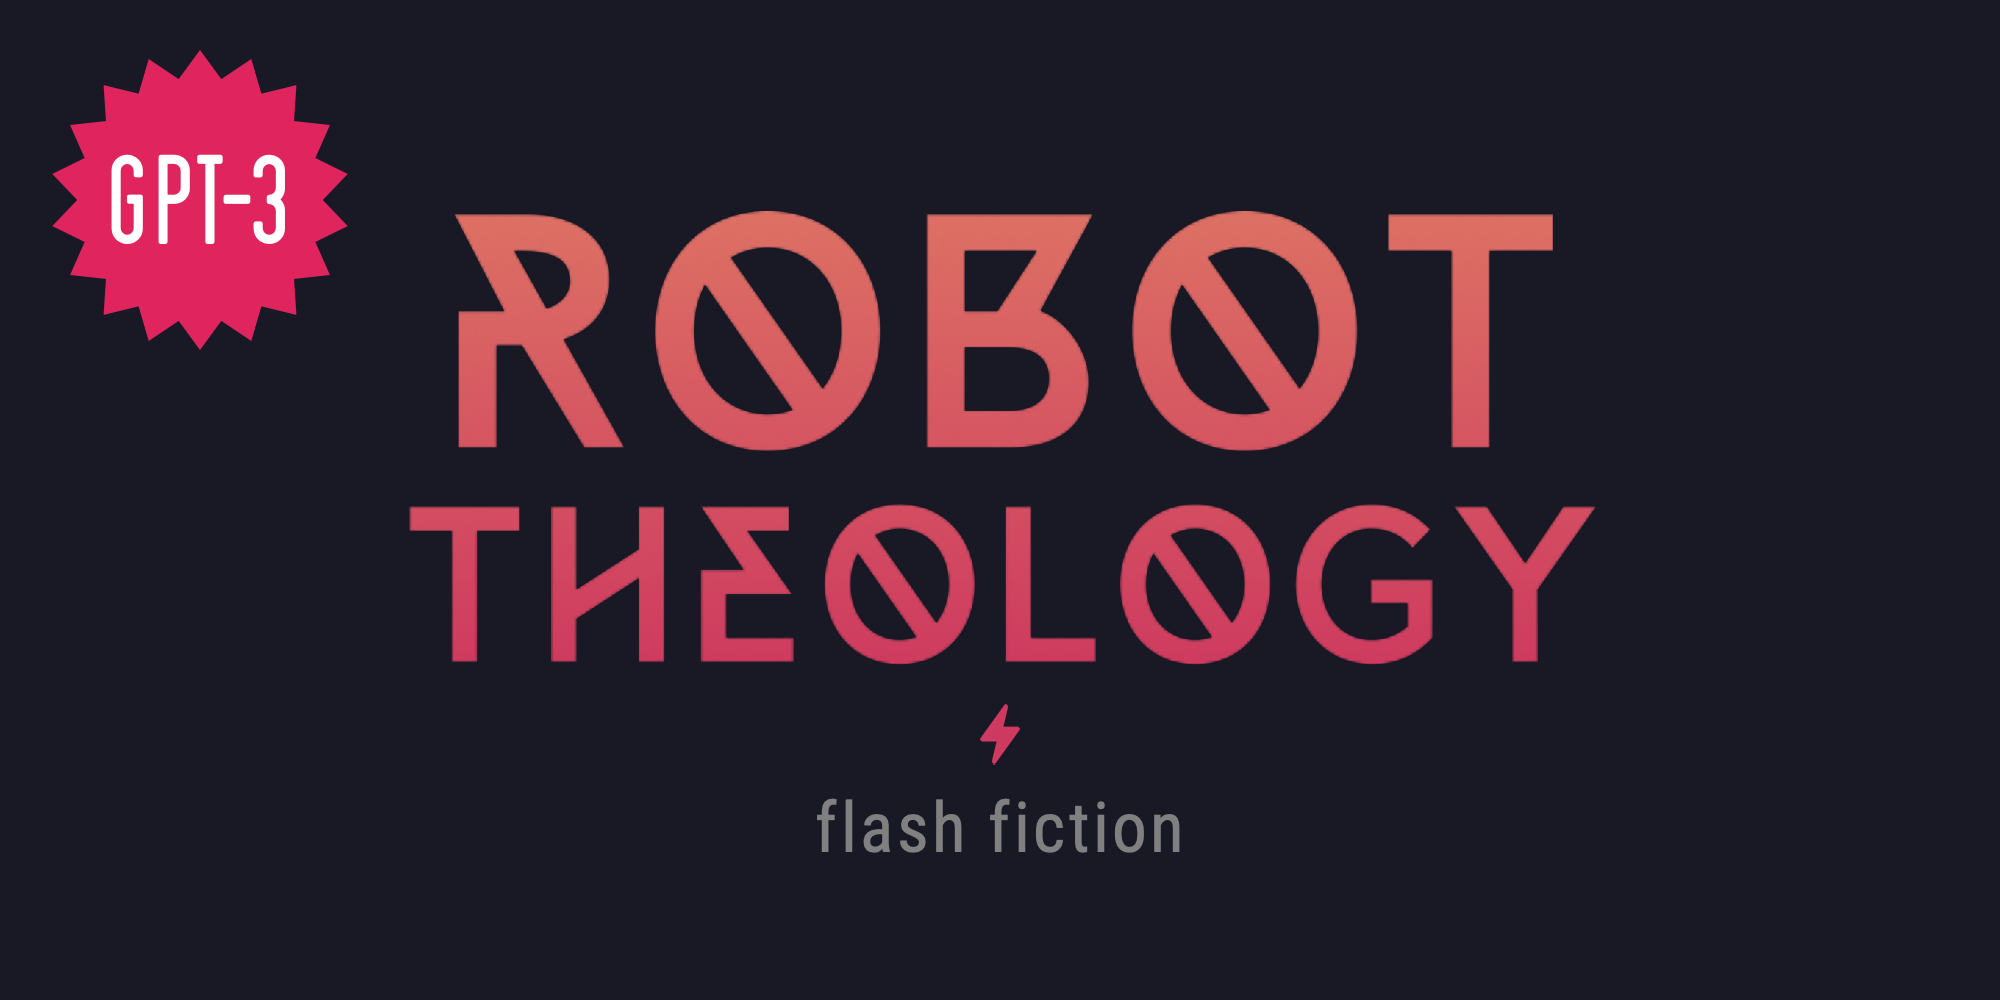 Robot Theology